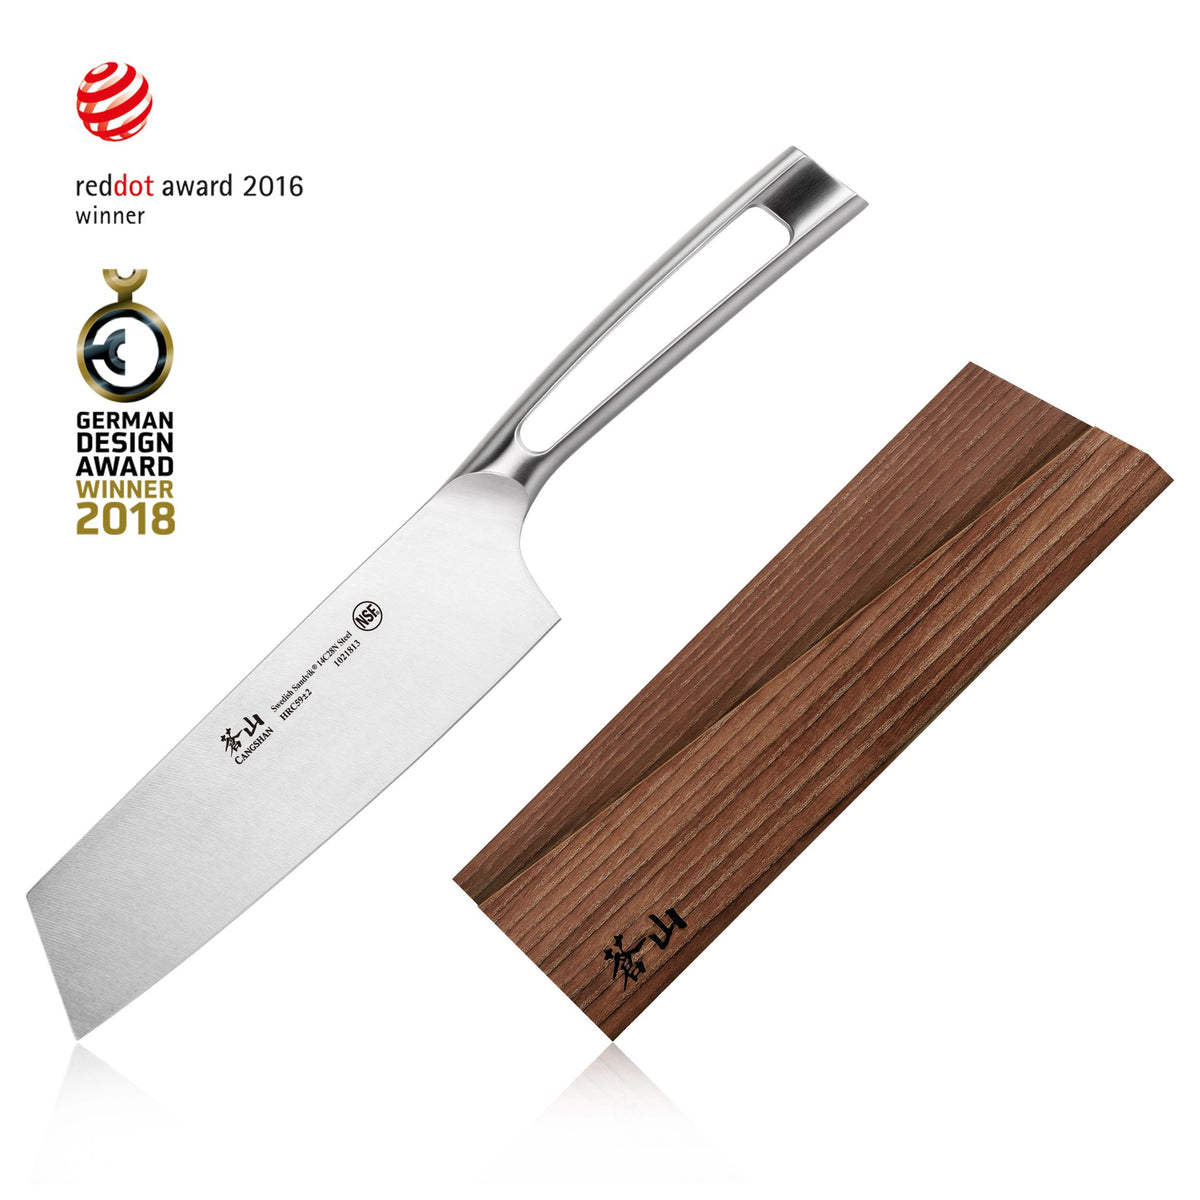  Cangshan NAKA Series 503114 X-7 Steel Forged 6-inch Serrated  Utility Knife with Sheath: Home & Kitchen